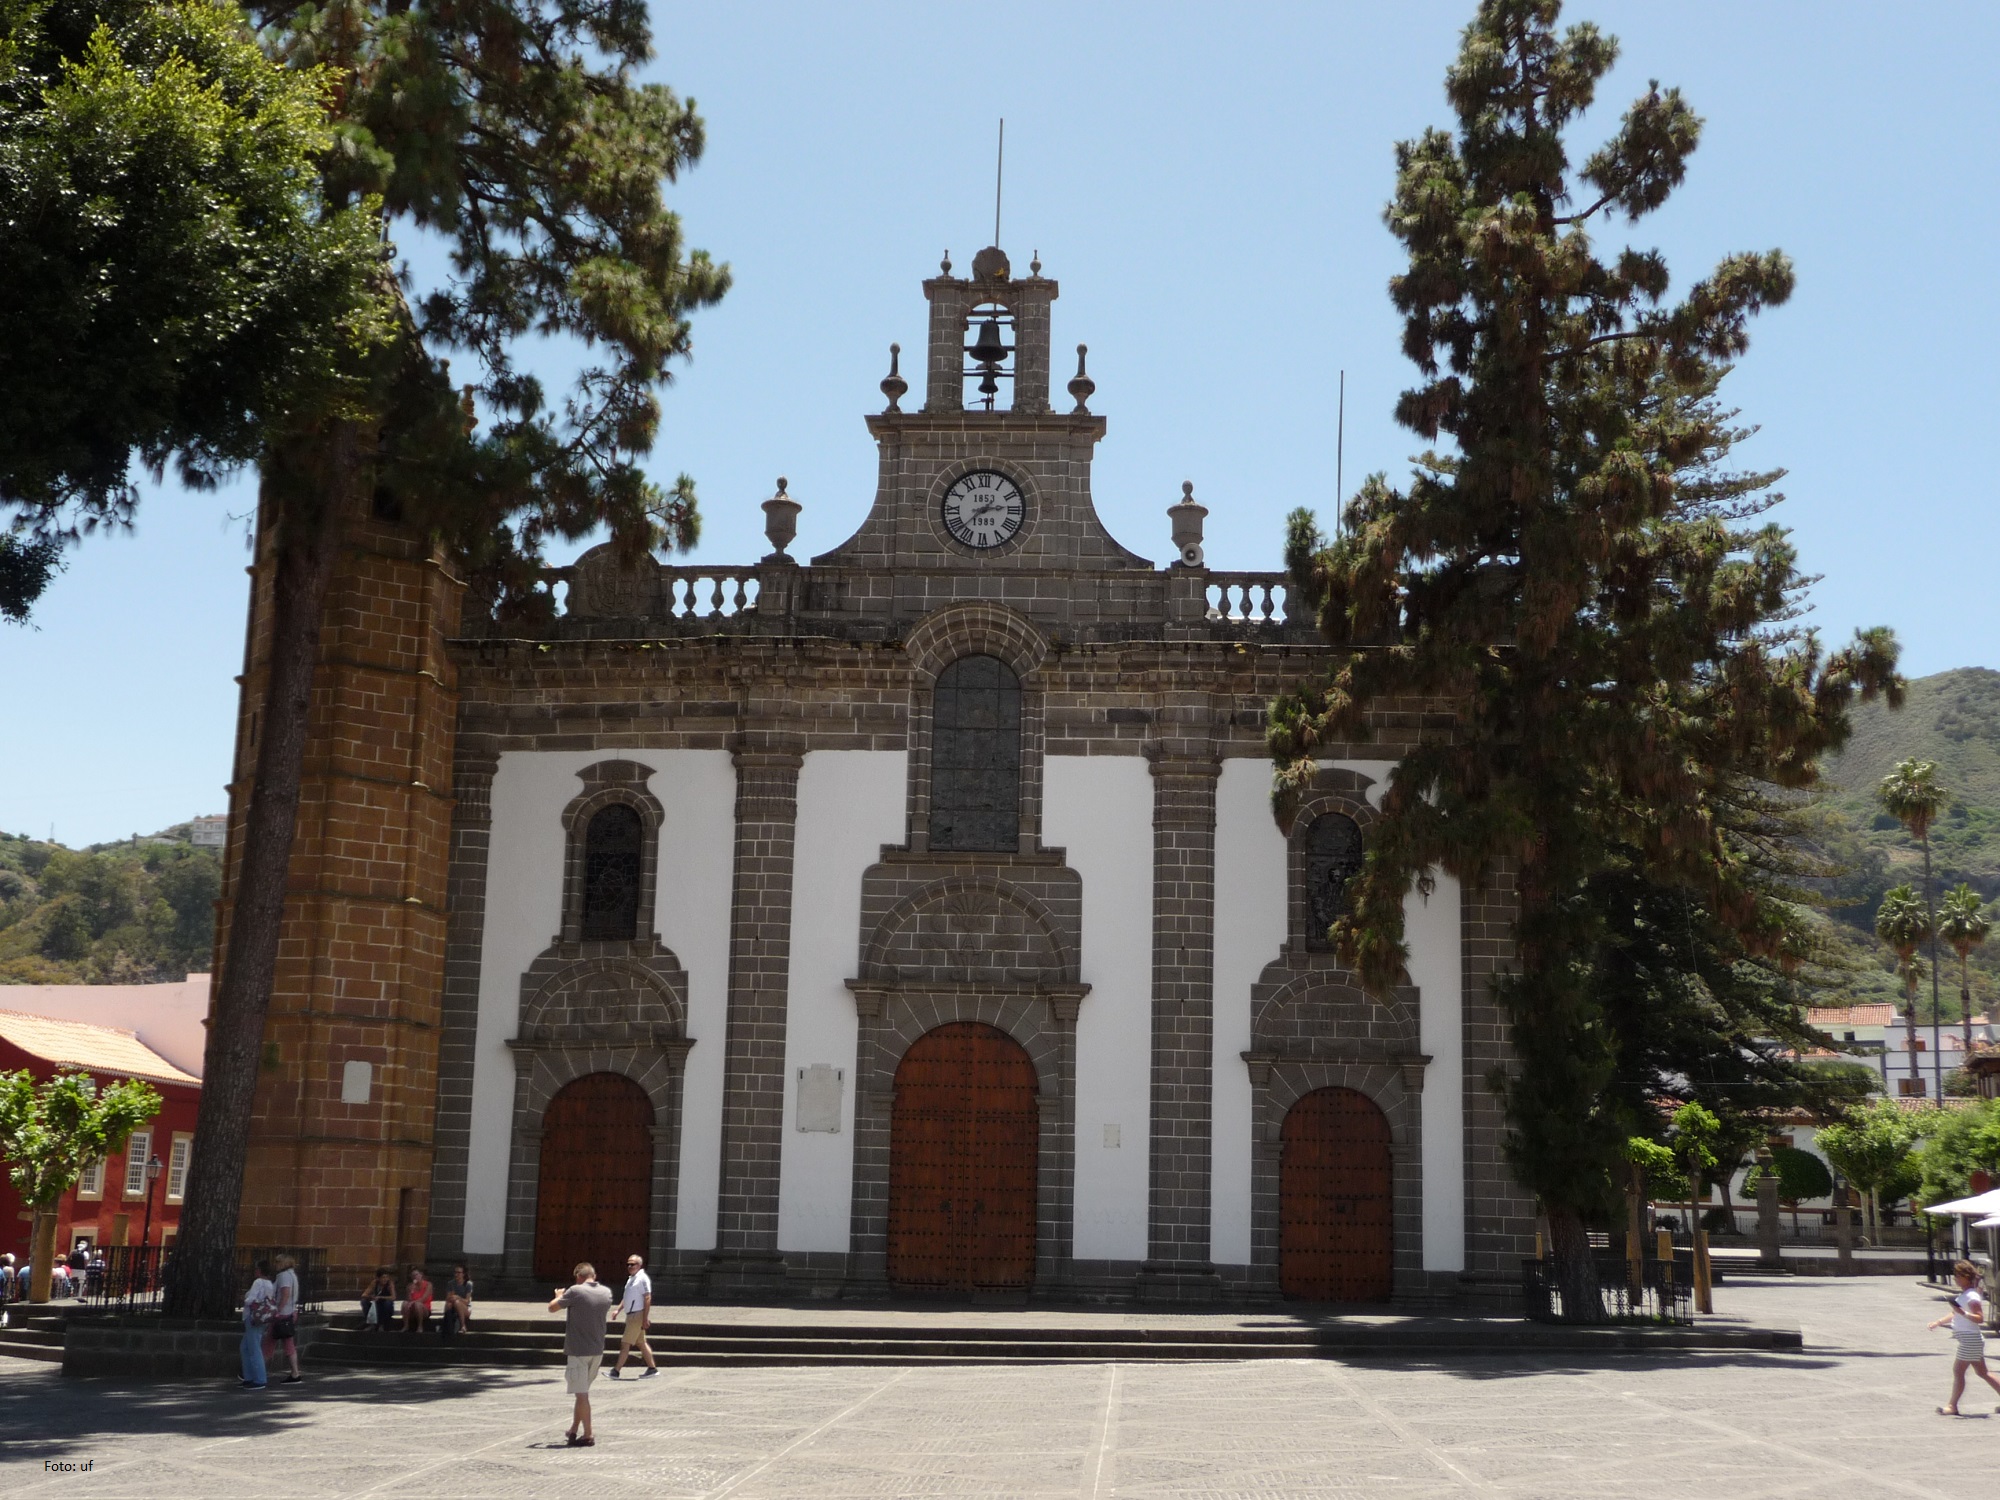 Blick von vorn auf die Basilica de Nuestra Senora del Pino